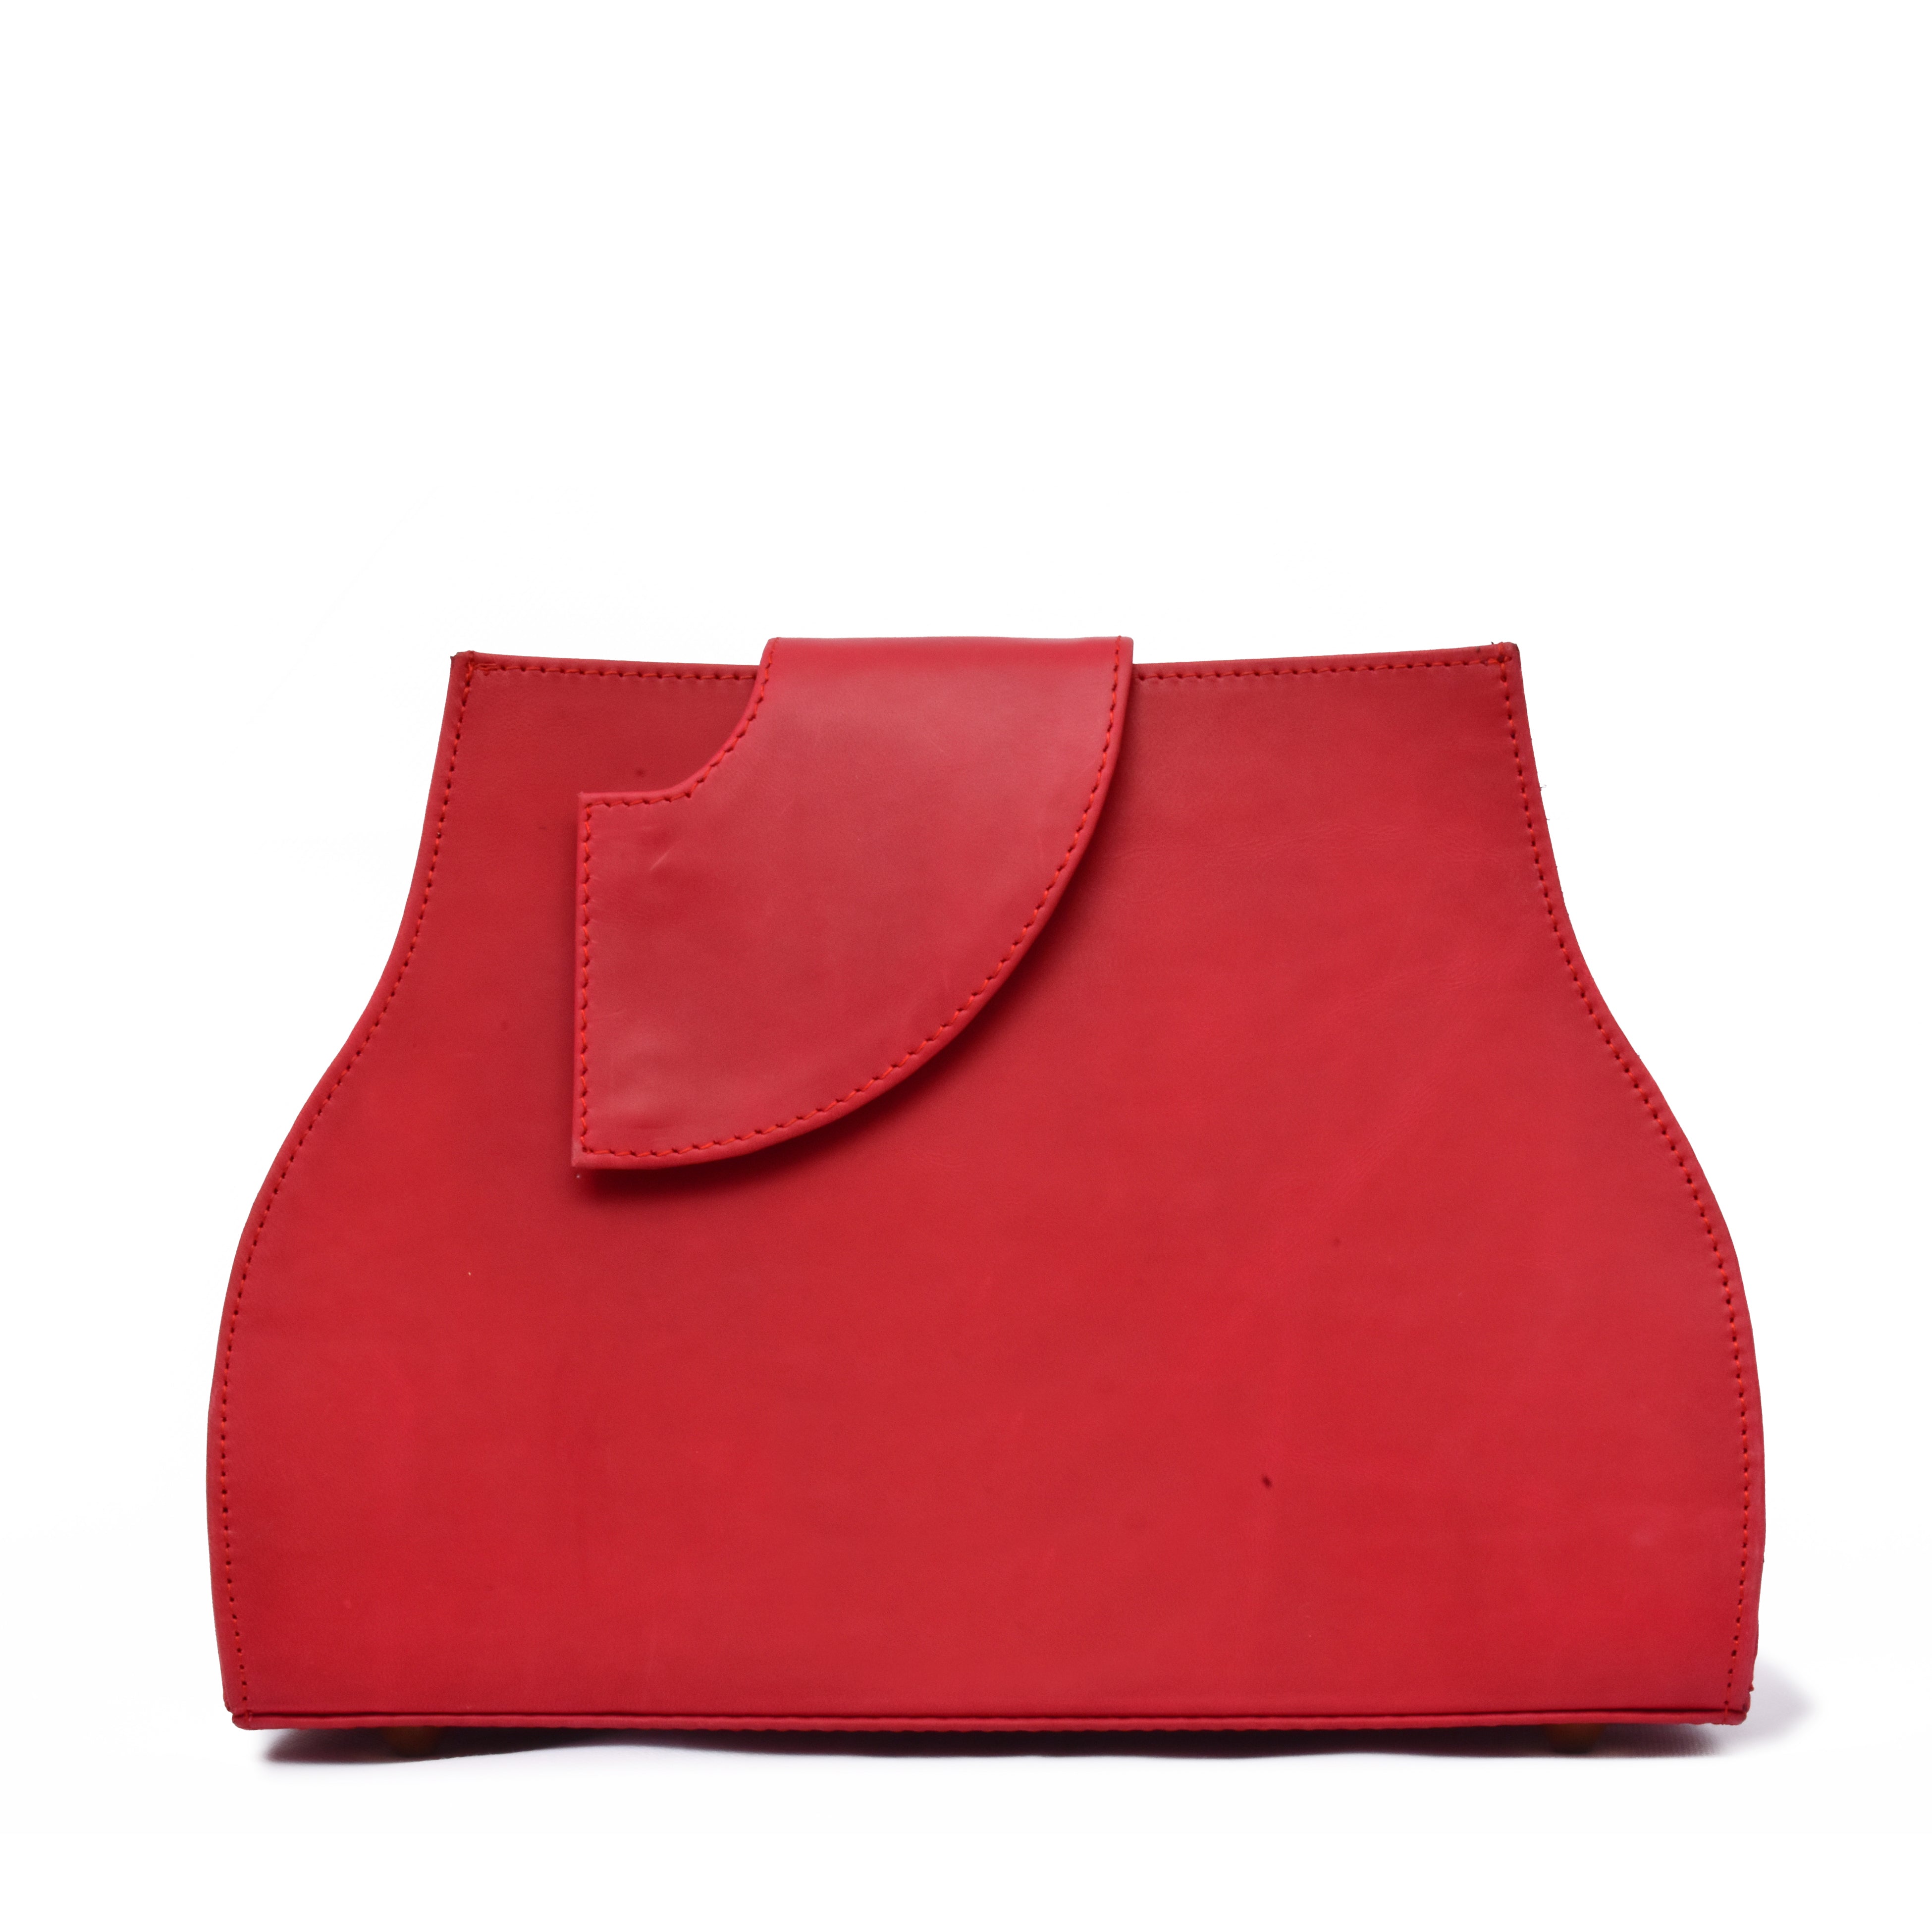 Anaya Newyork Handmade Red Leather Shoulder Bag